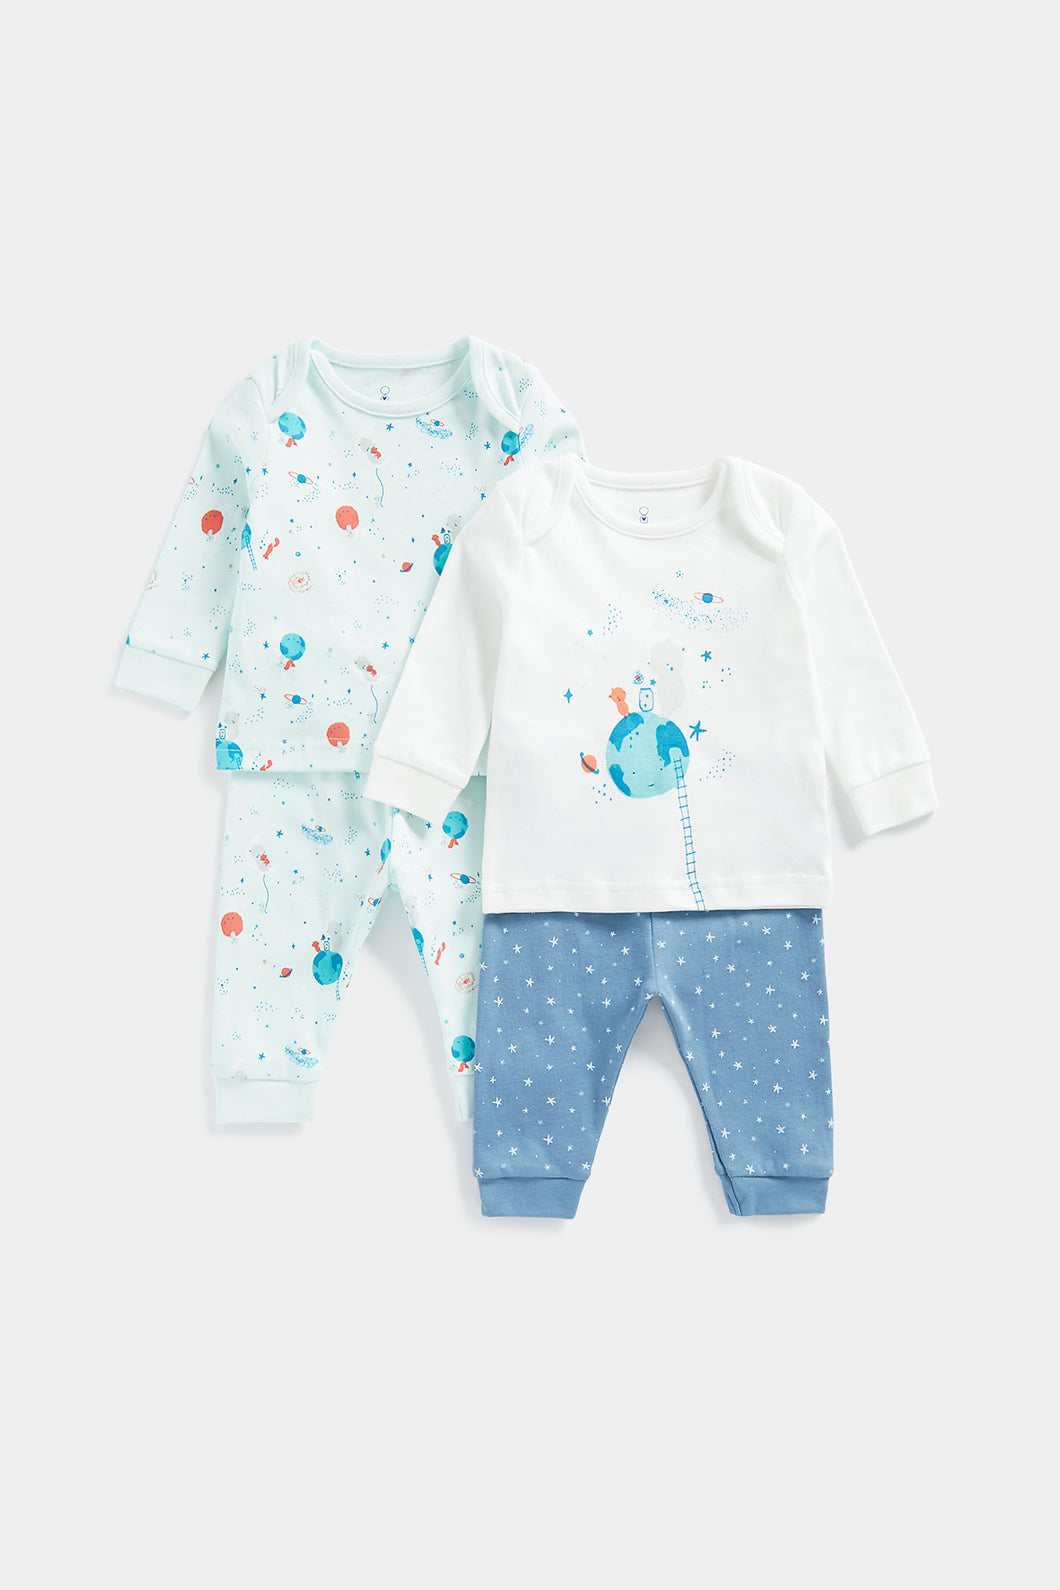 Mothercare Stargazer Baby Pyjamas - 2 Pack